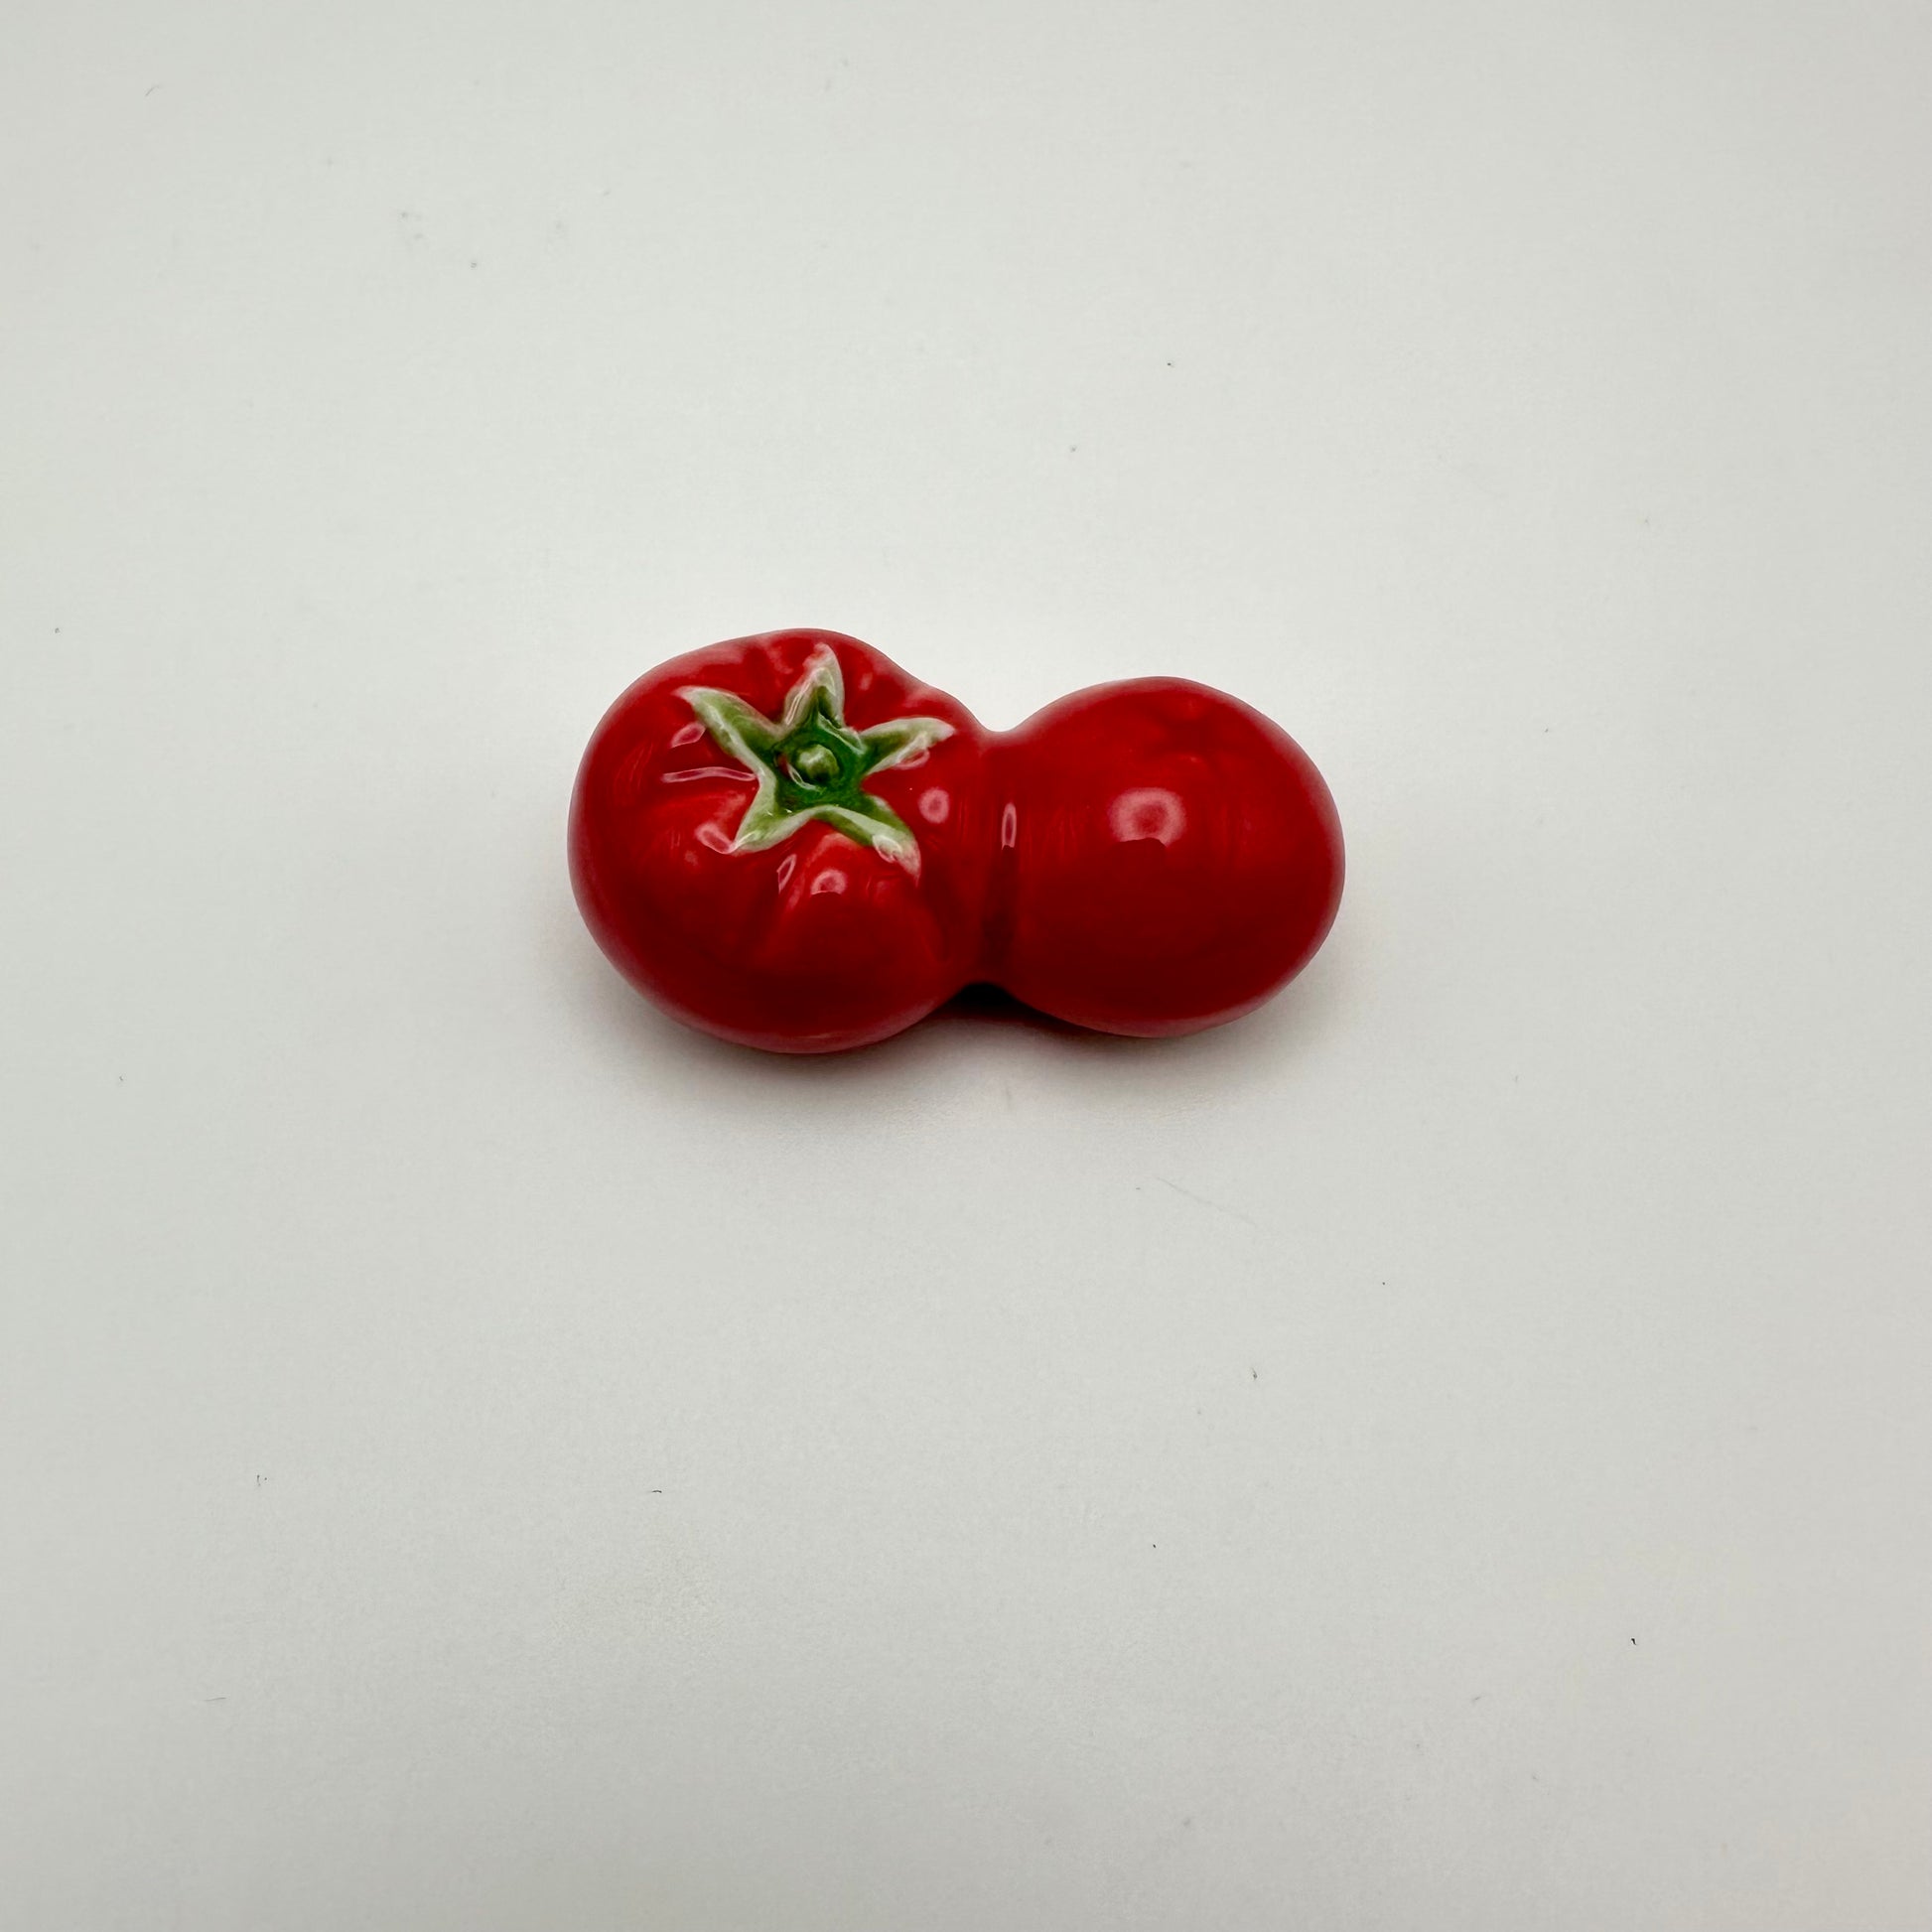 Tomato chopstick holders